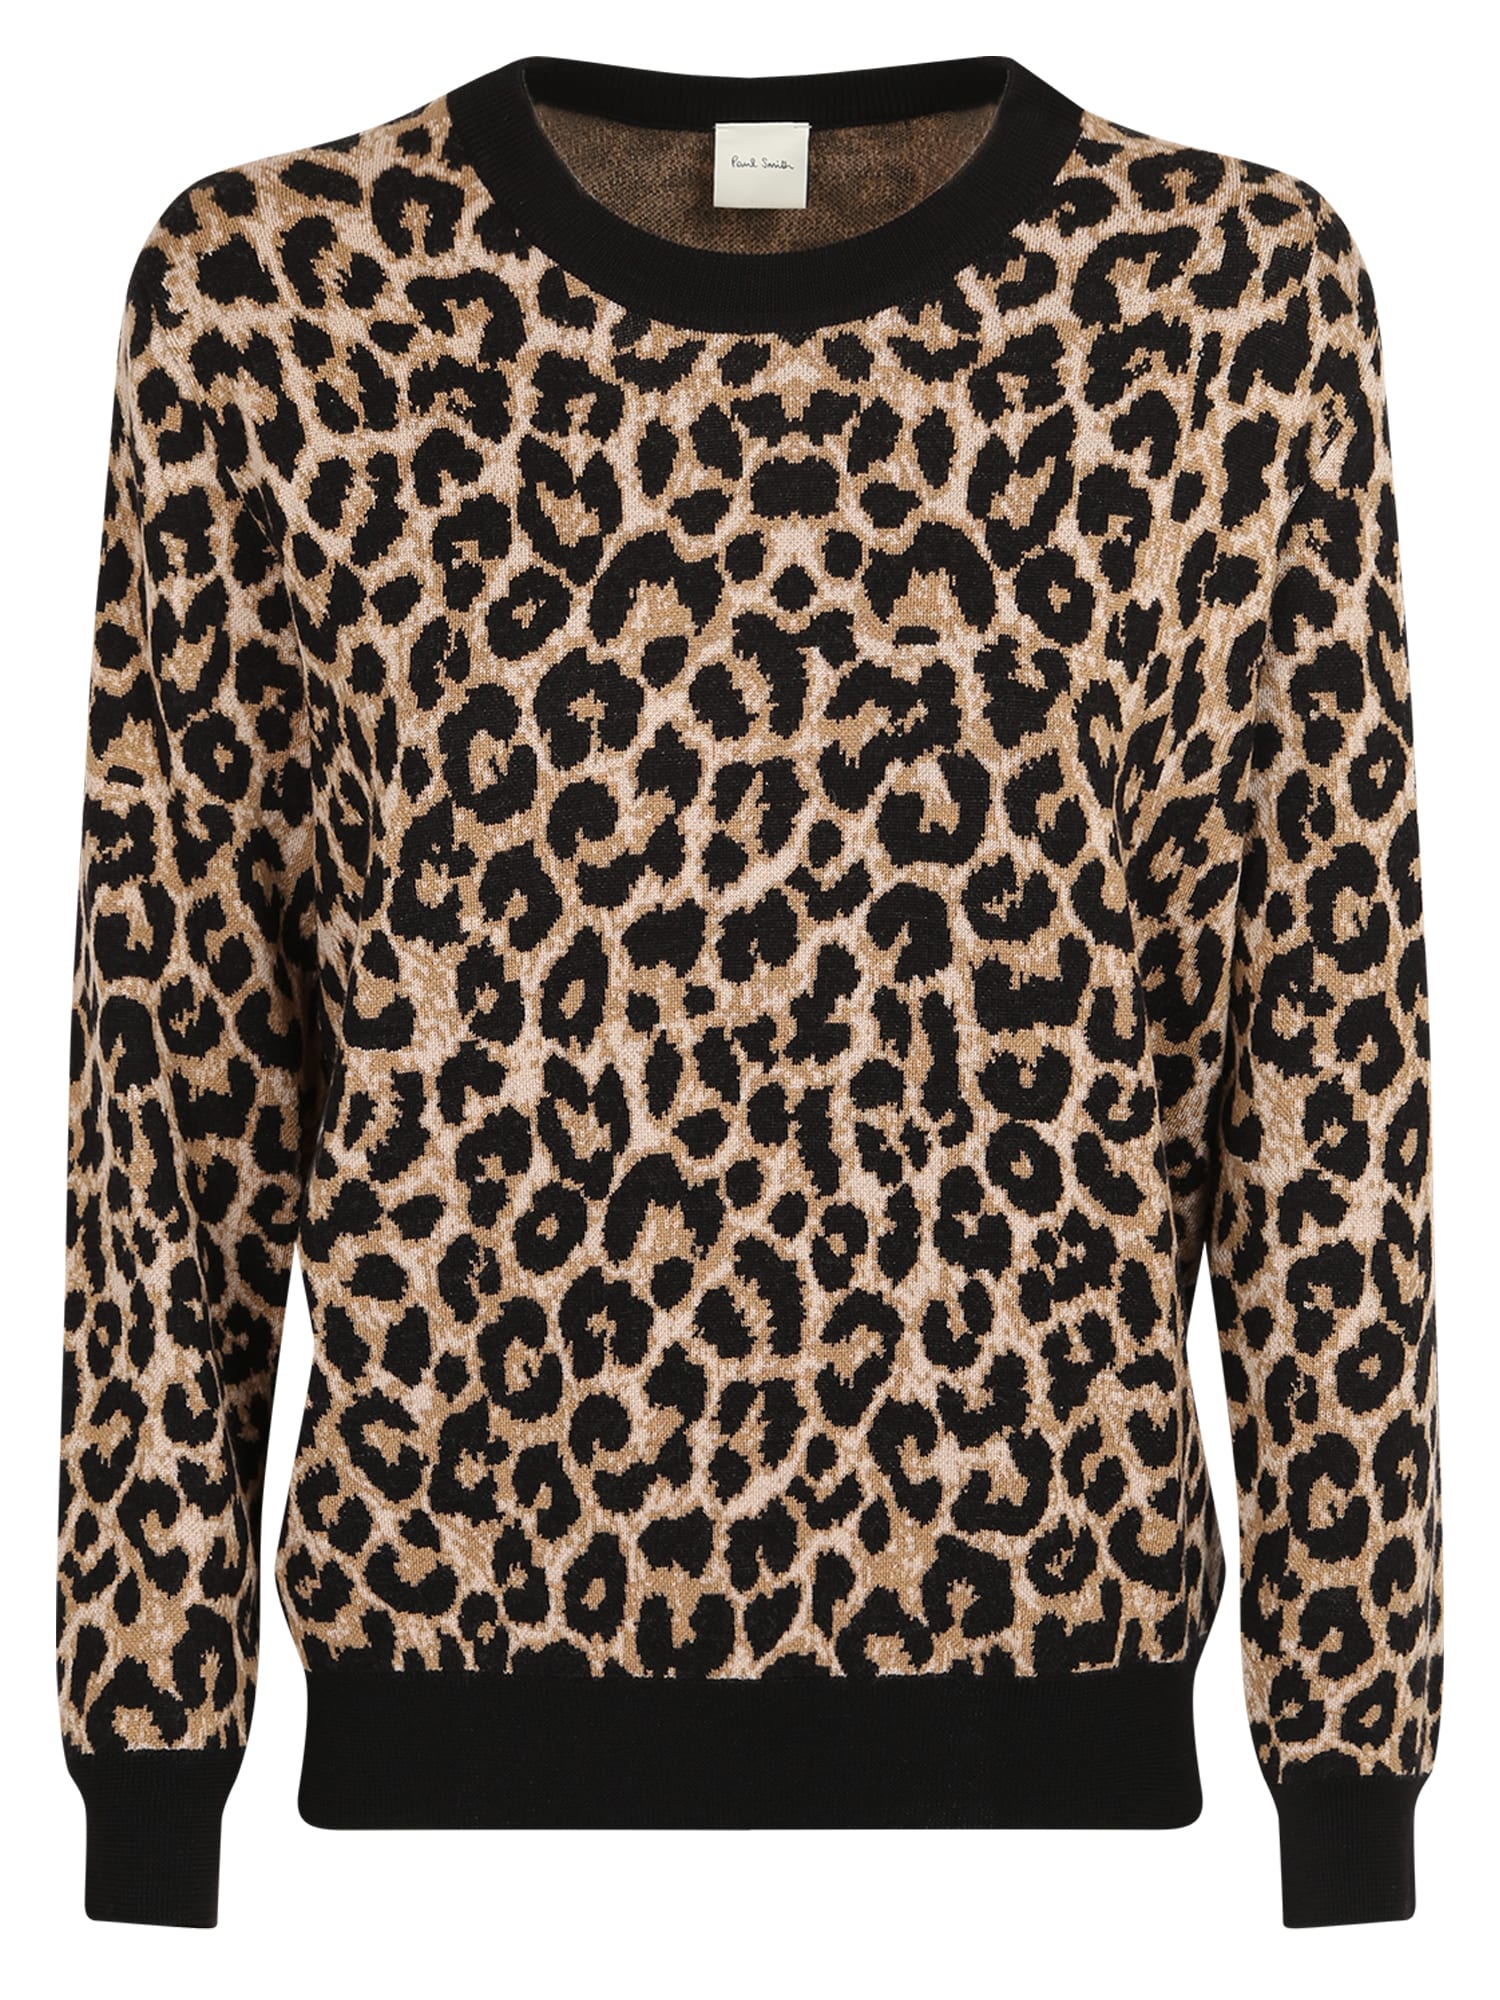 Paul Smith Leopard Print Sweater